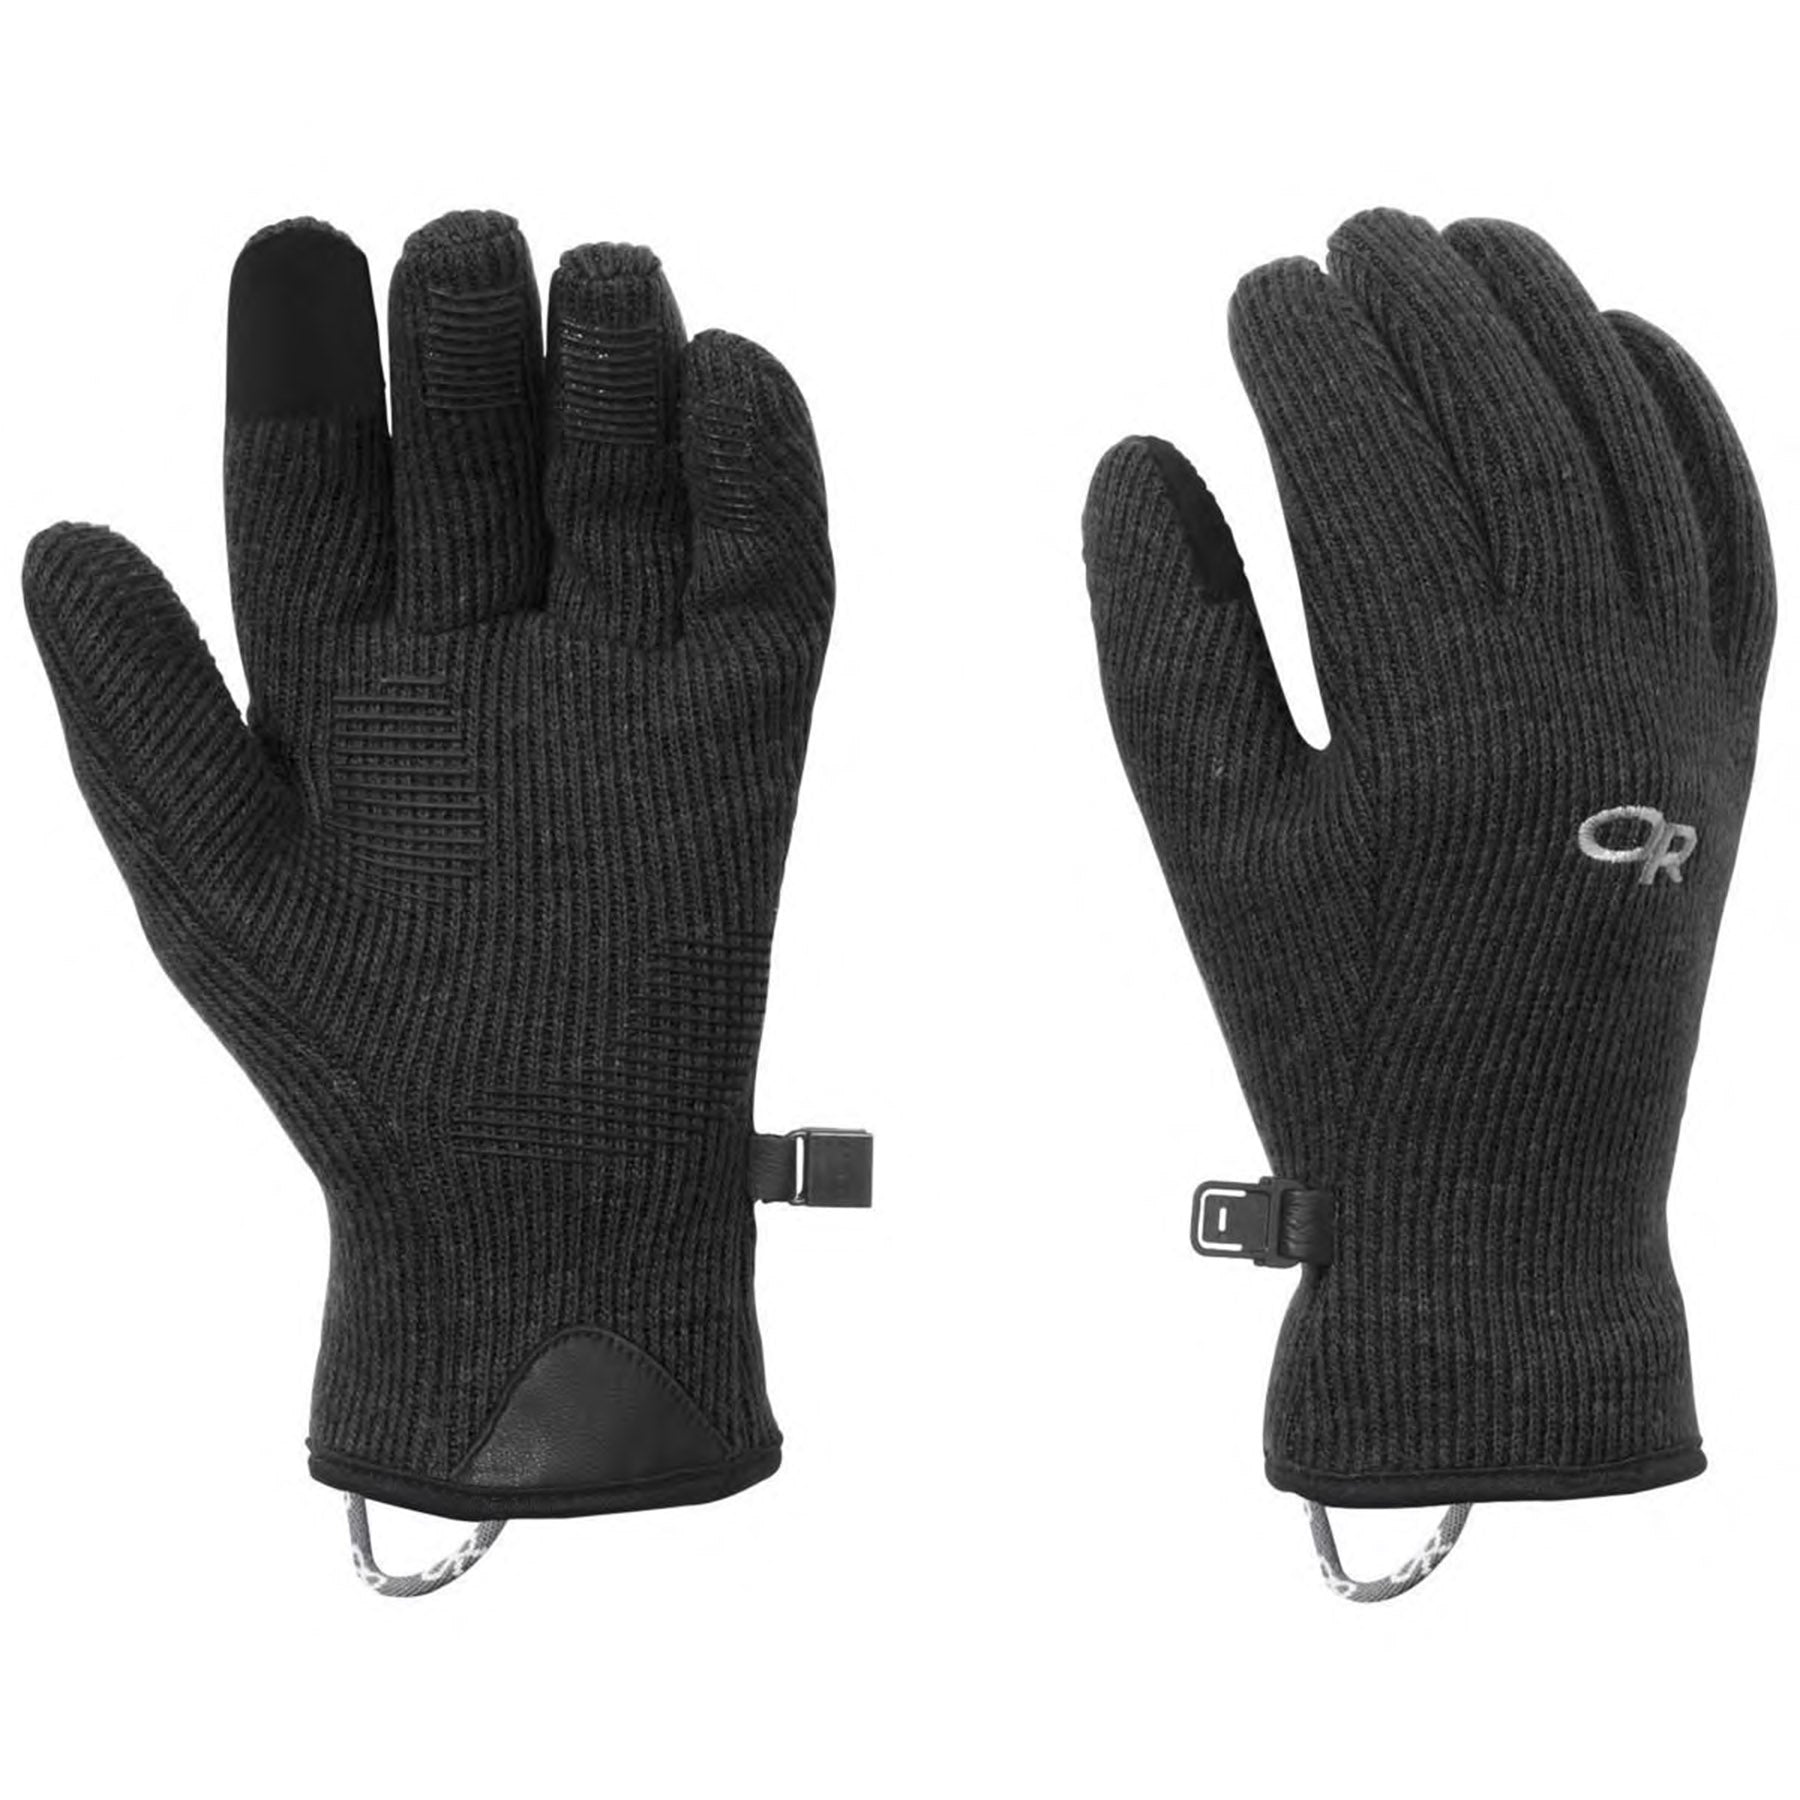 flurry sensor glove pair